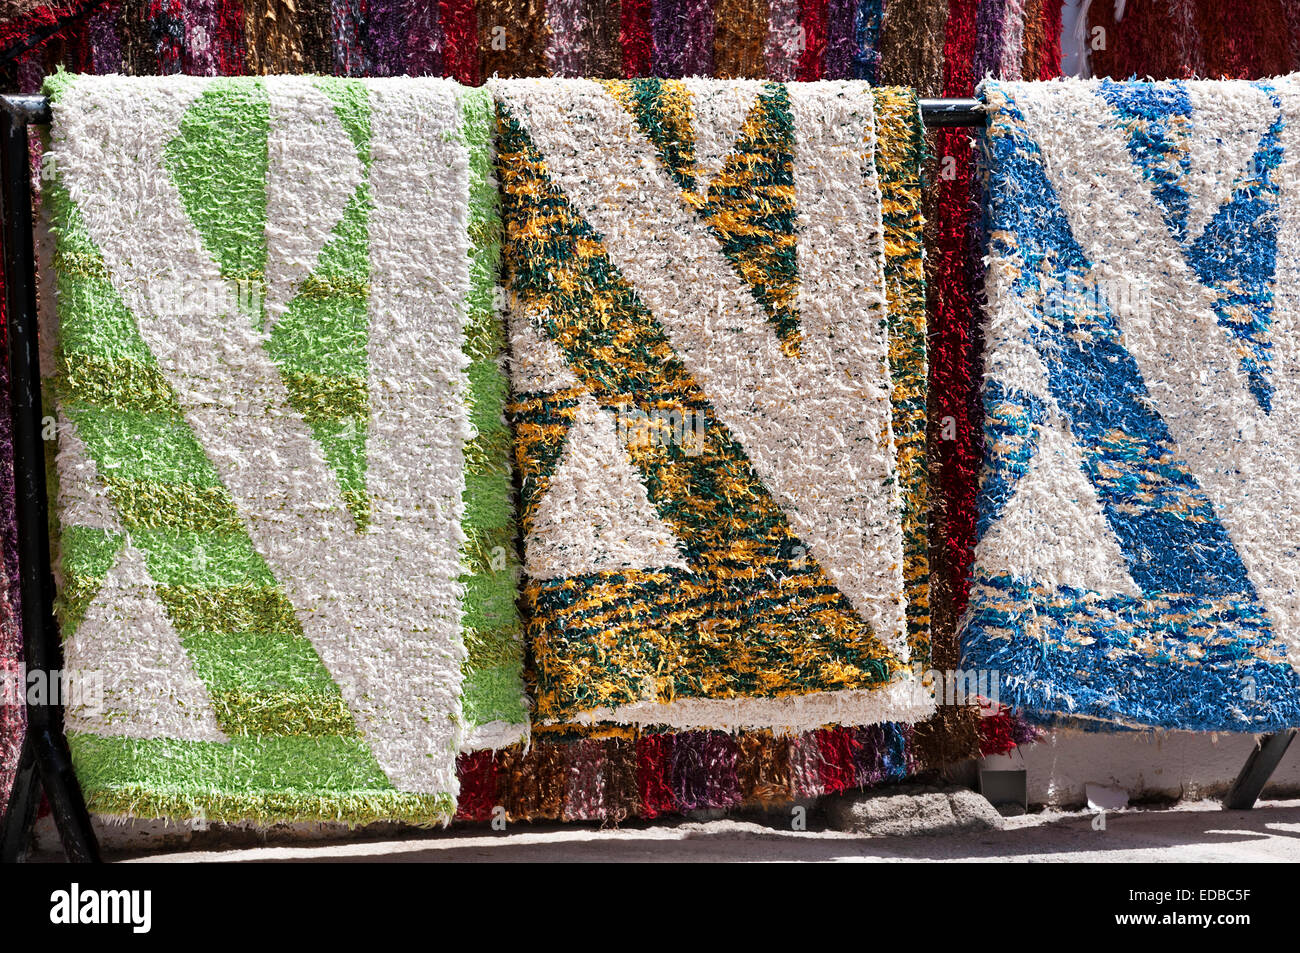 Colorful hand-woven carpets for sale, Capileira, Alpujarras, Sierra Nevada, Spain Stock Photo